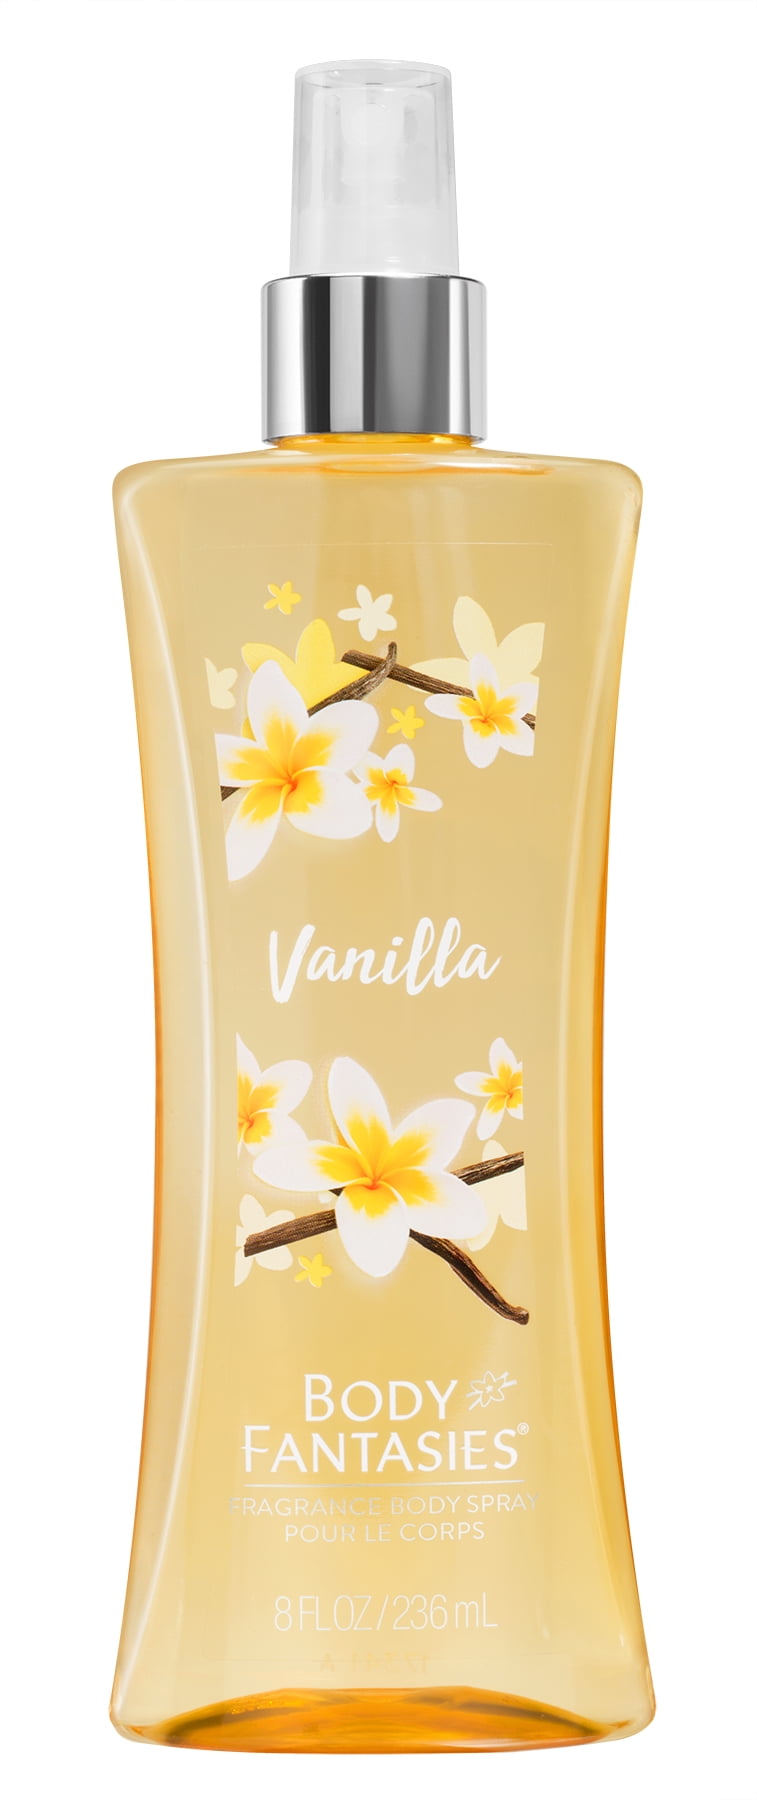 Body Fantasies Signature Fragrance Body Spray, Vanilla, 8 fl oz